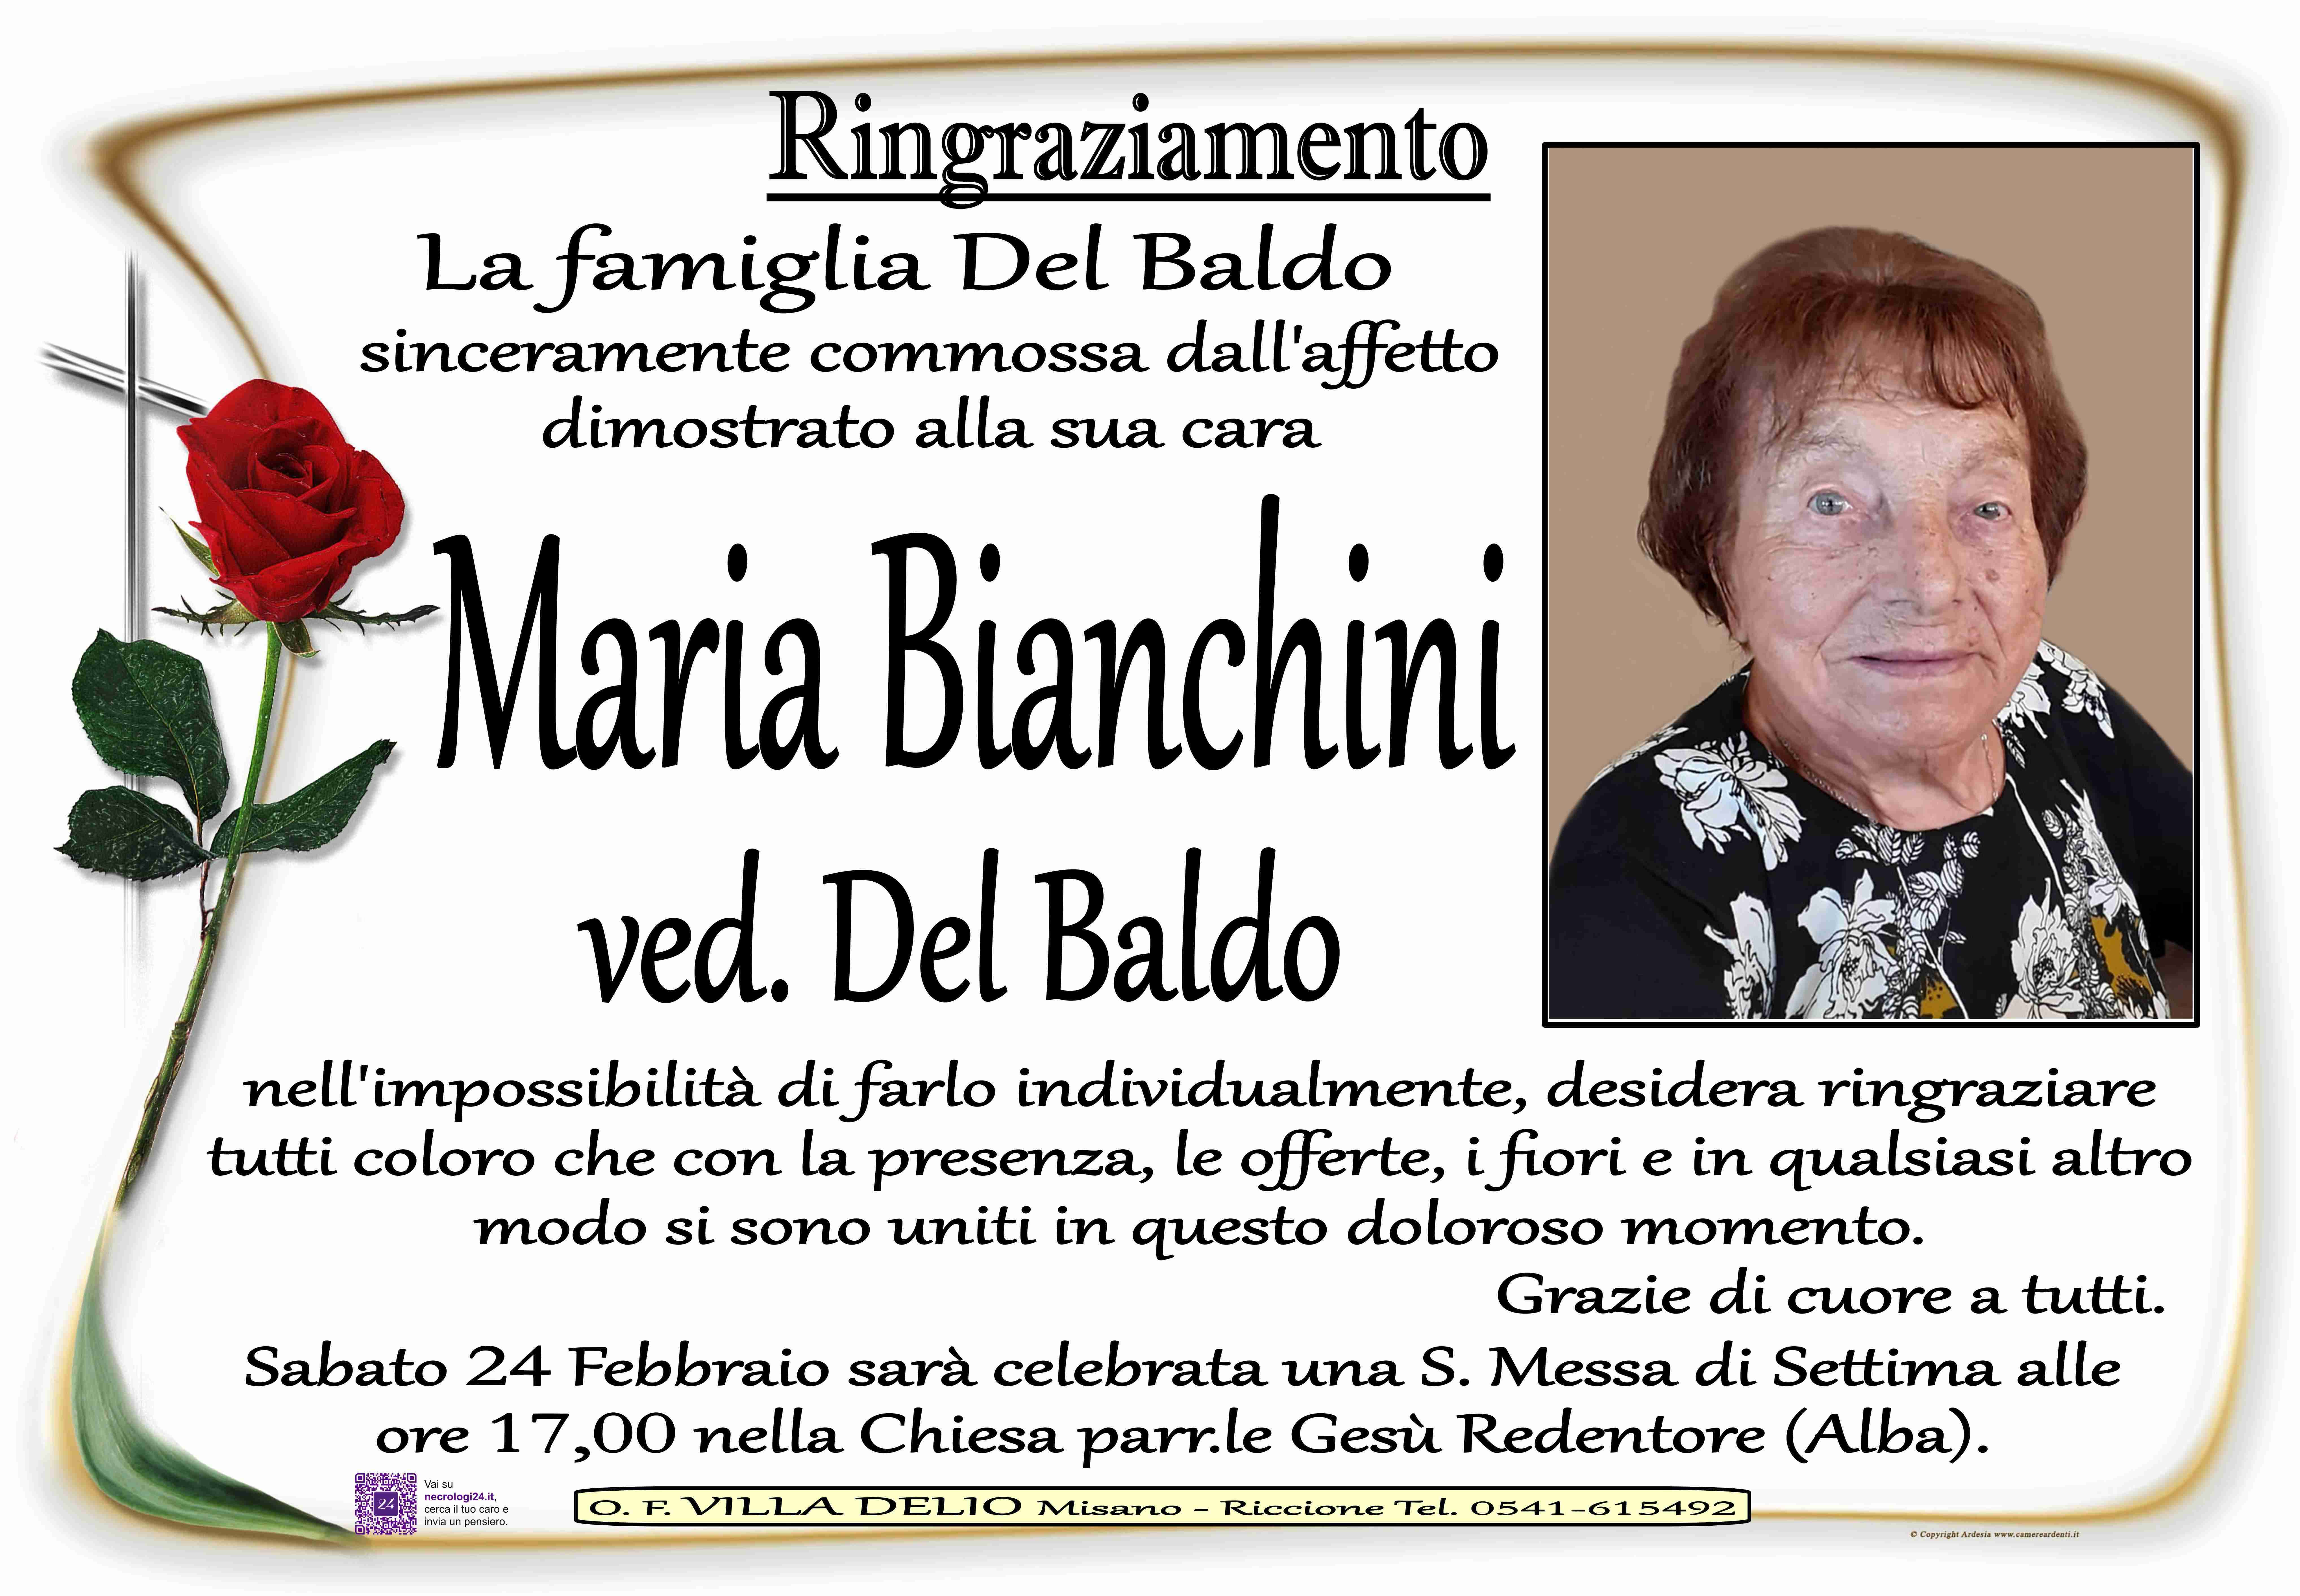 Maria Bianchini